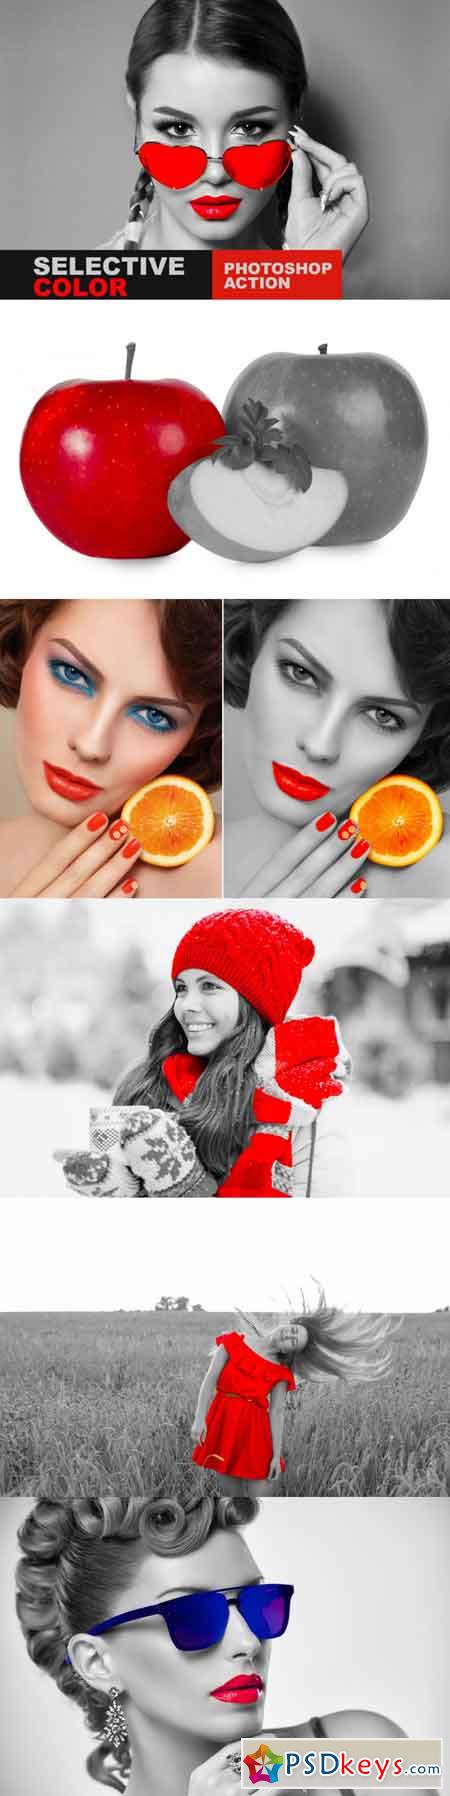 Selective Color Photoshop Action 3466289